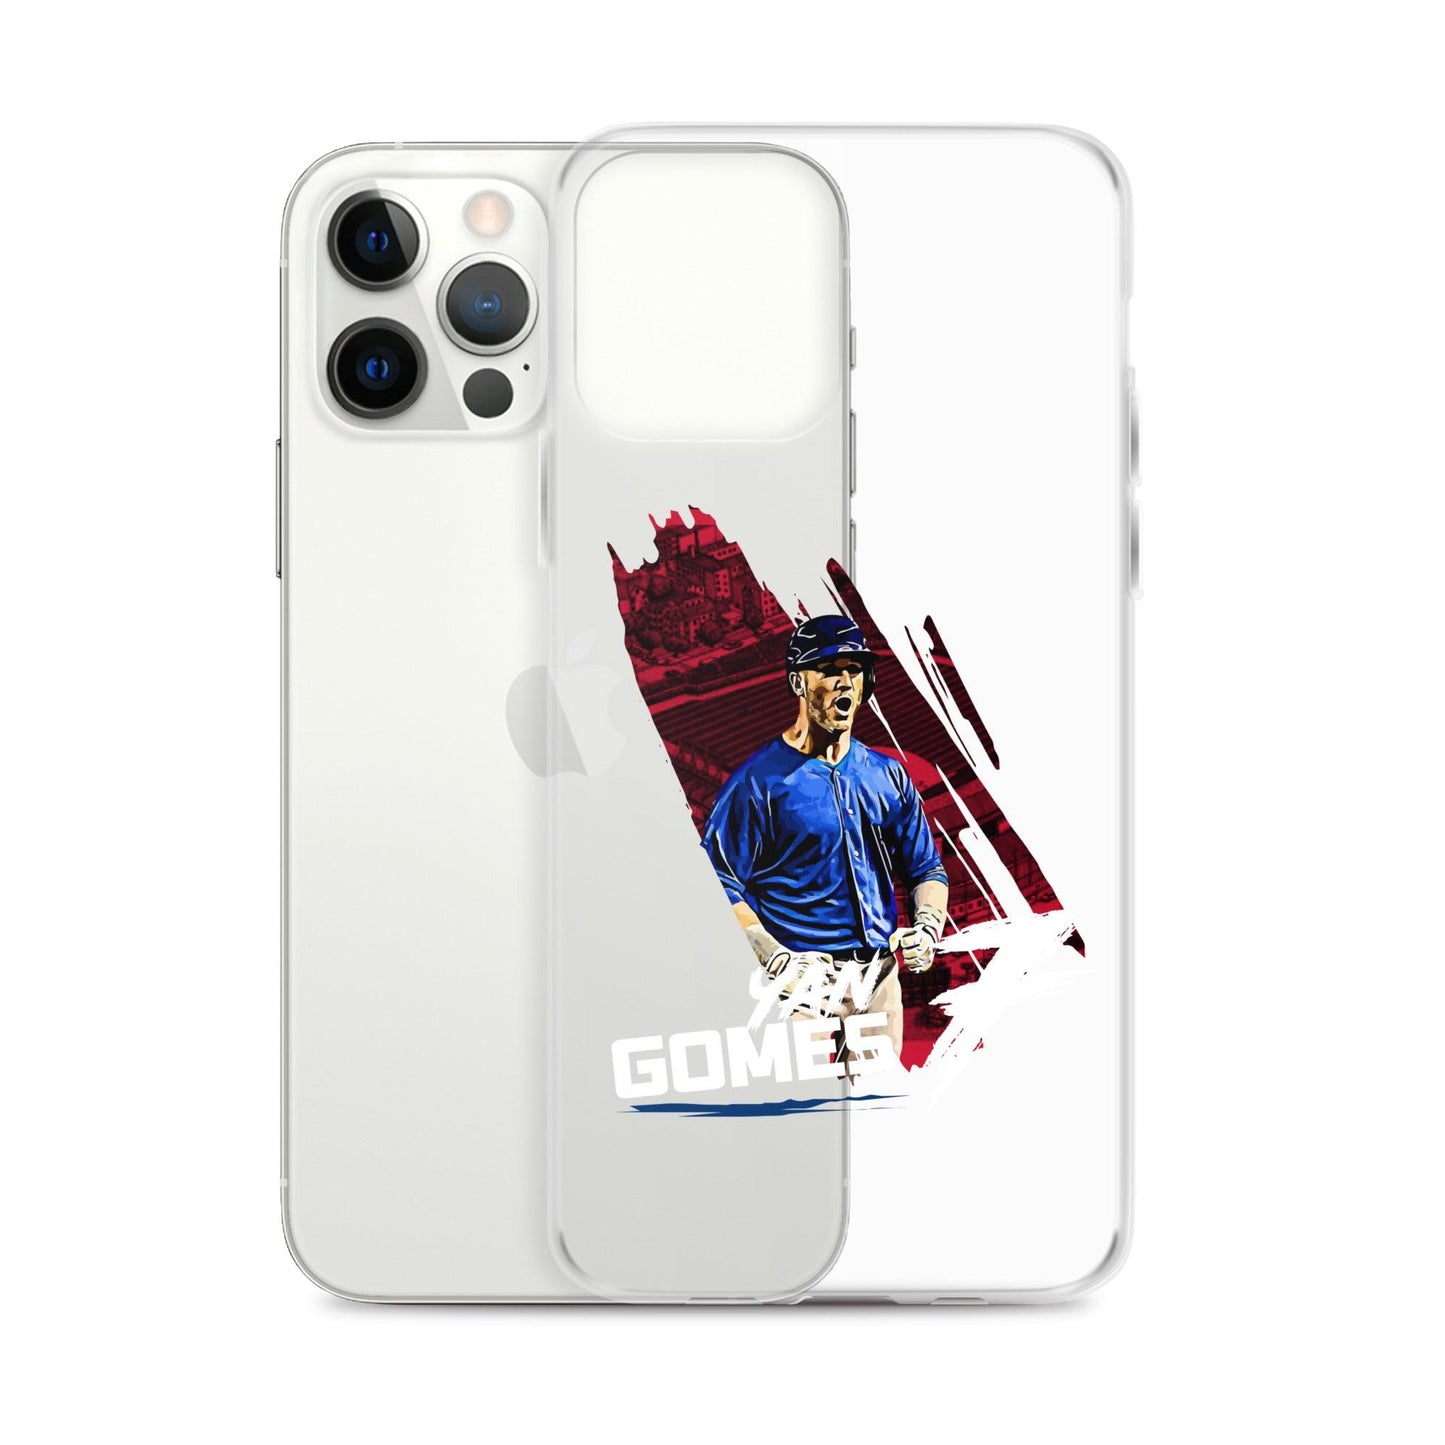 Yan Gomes "Gametime" iPhone Case - Fan Arch